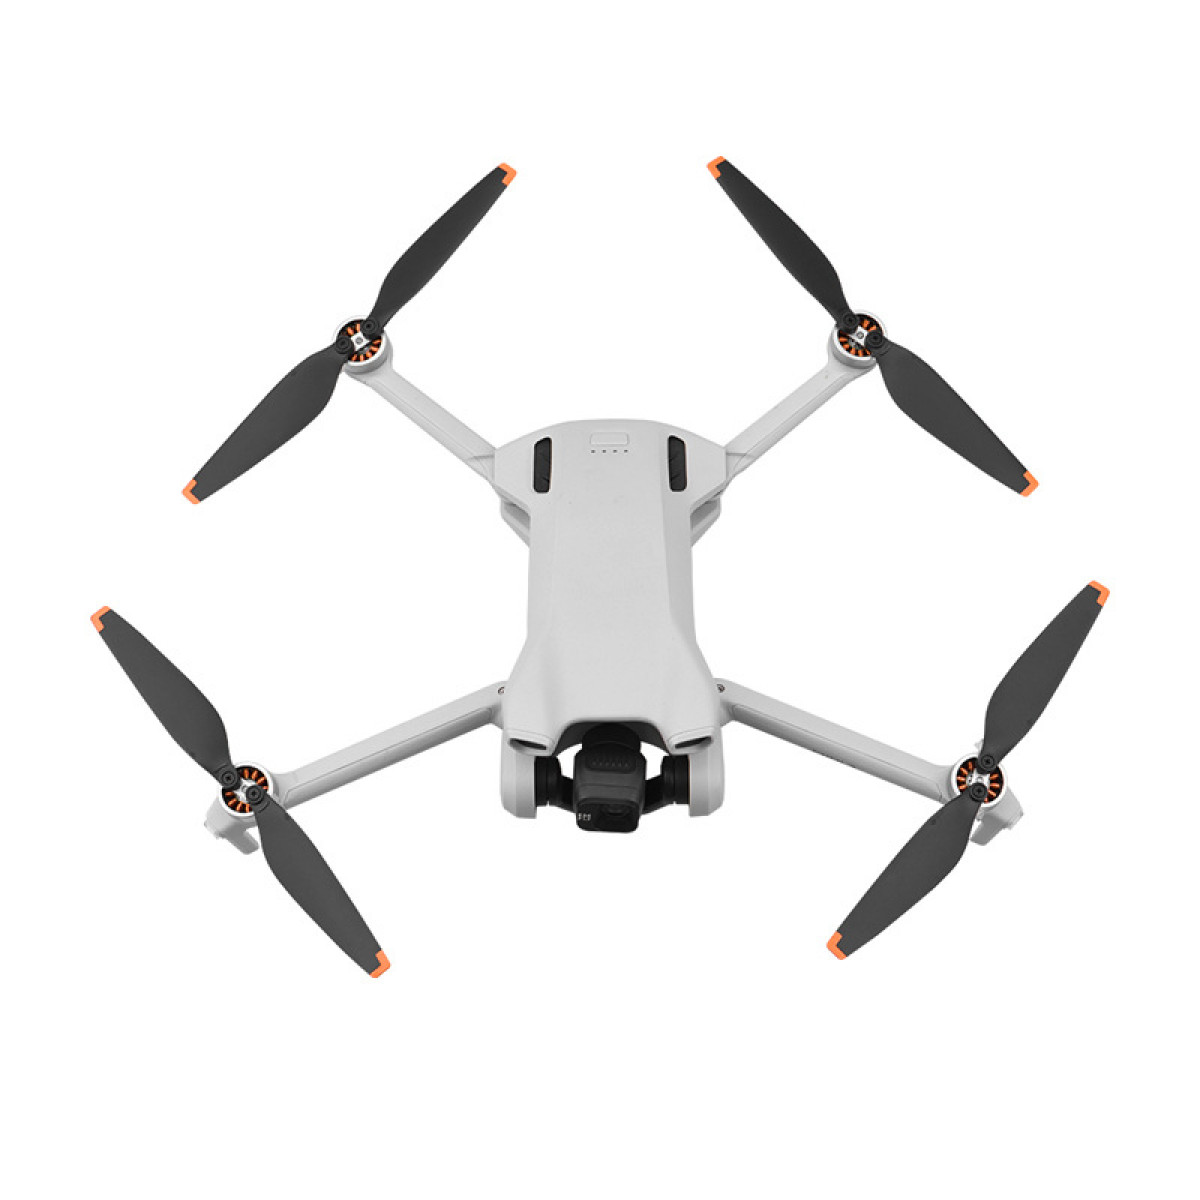 INF Ersatz-Drohnenpropeller, geräuscharm, leicht, 2 Propeller, Orange Paar